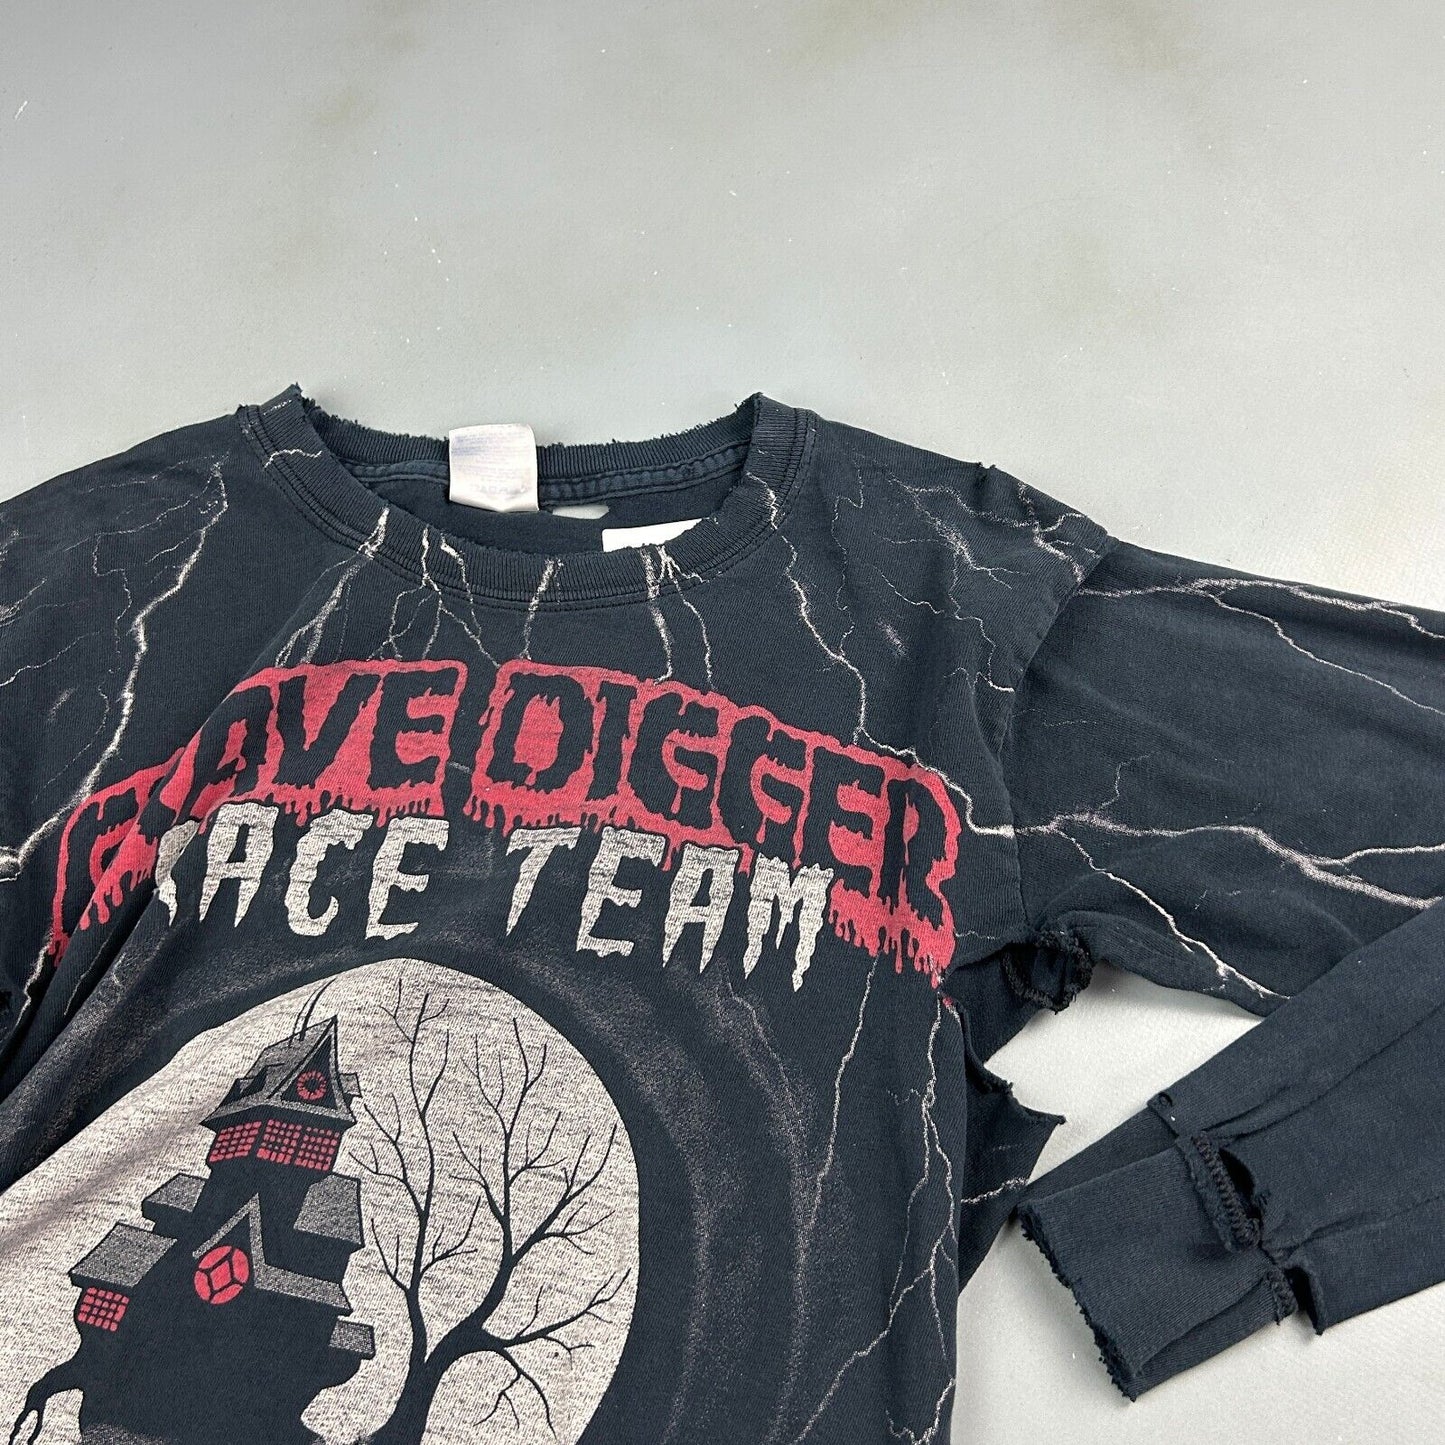 VINTAGE Grave Digger Race Team All Over Print Long Sleeve T-Shirt sz Sm Adult